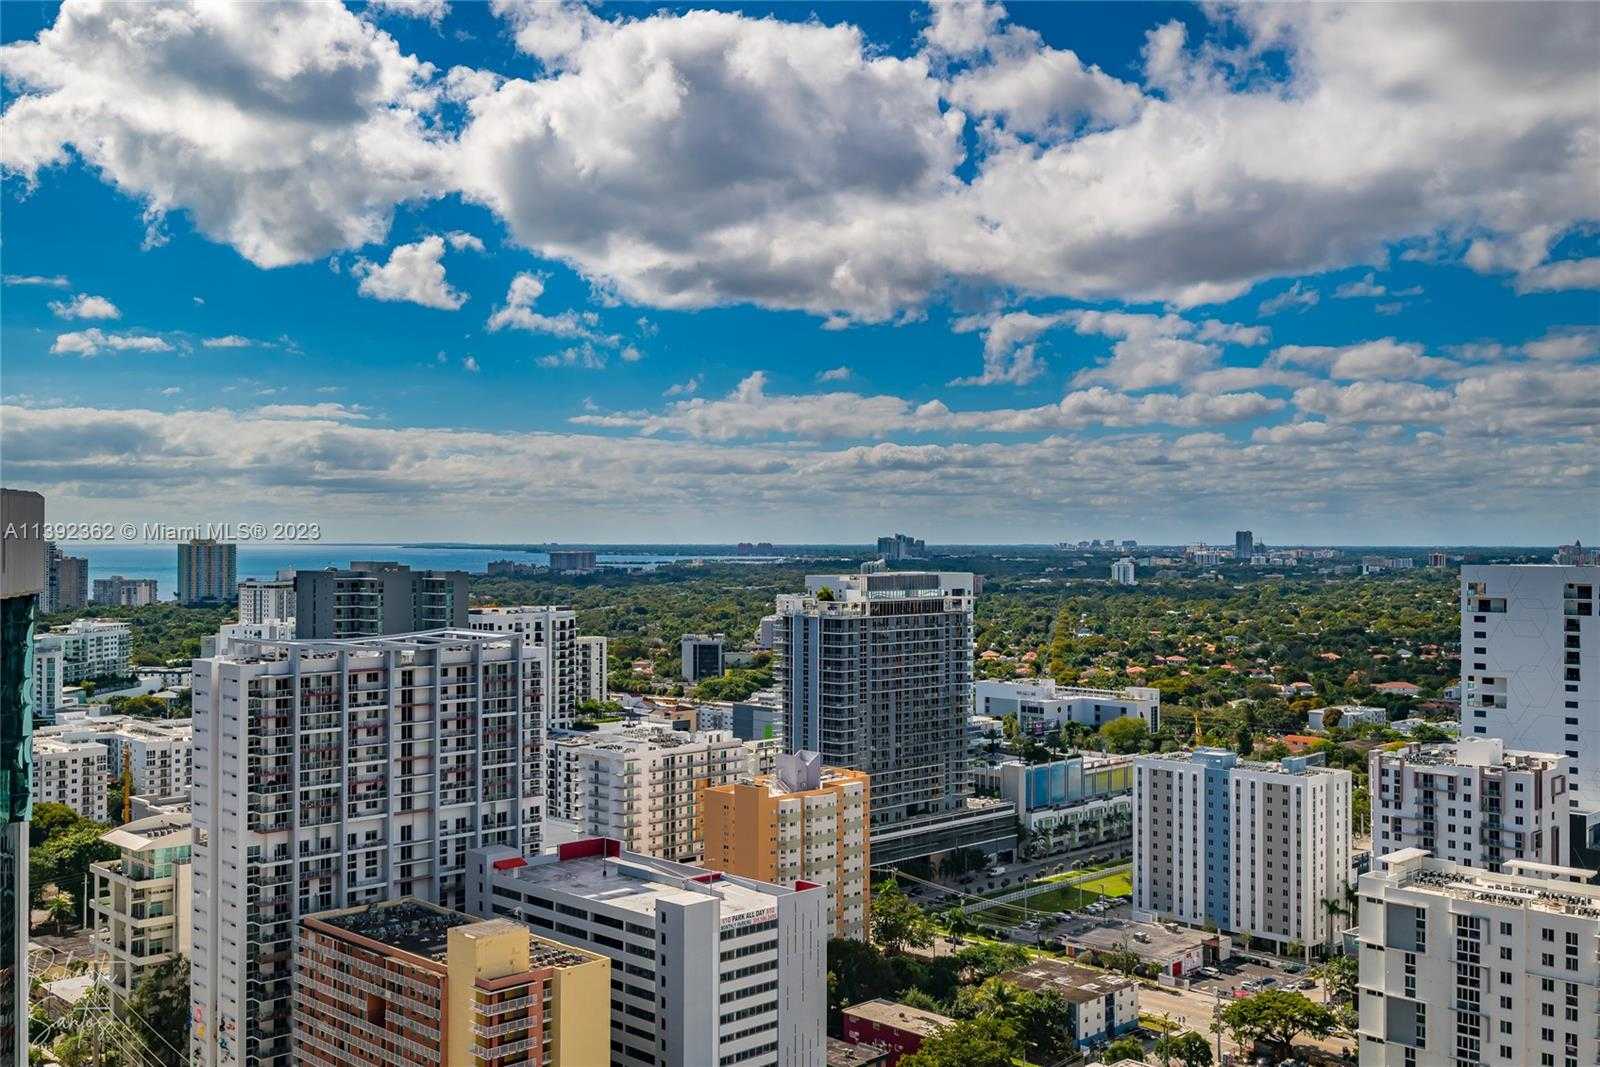 View Miami, FL 33130 property